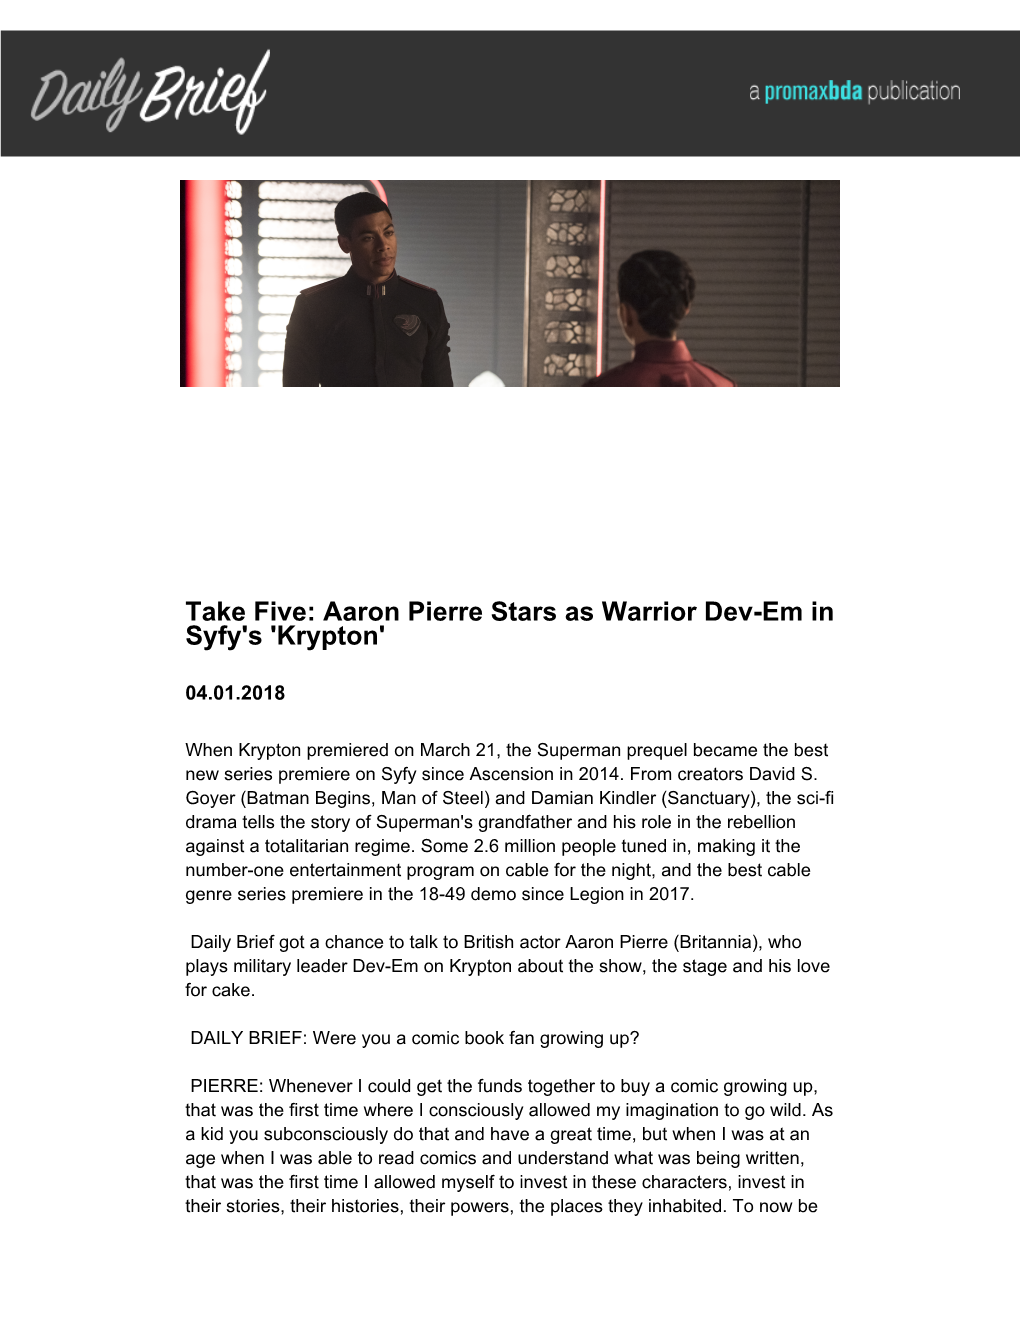 Aaron Pierre Stars As Warrior Dev-Em in Syfy's 'Krypton'